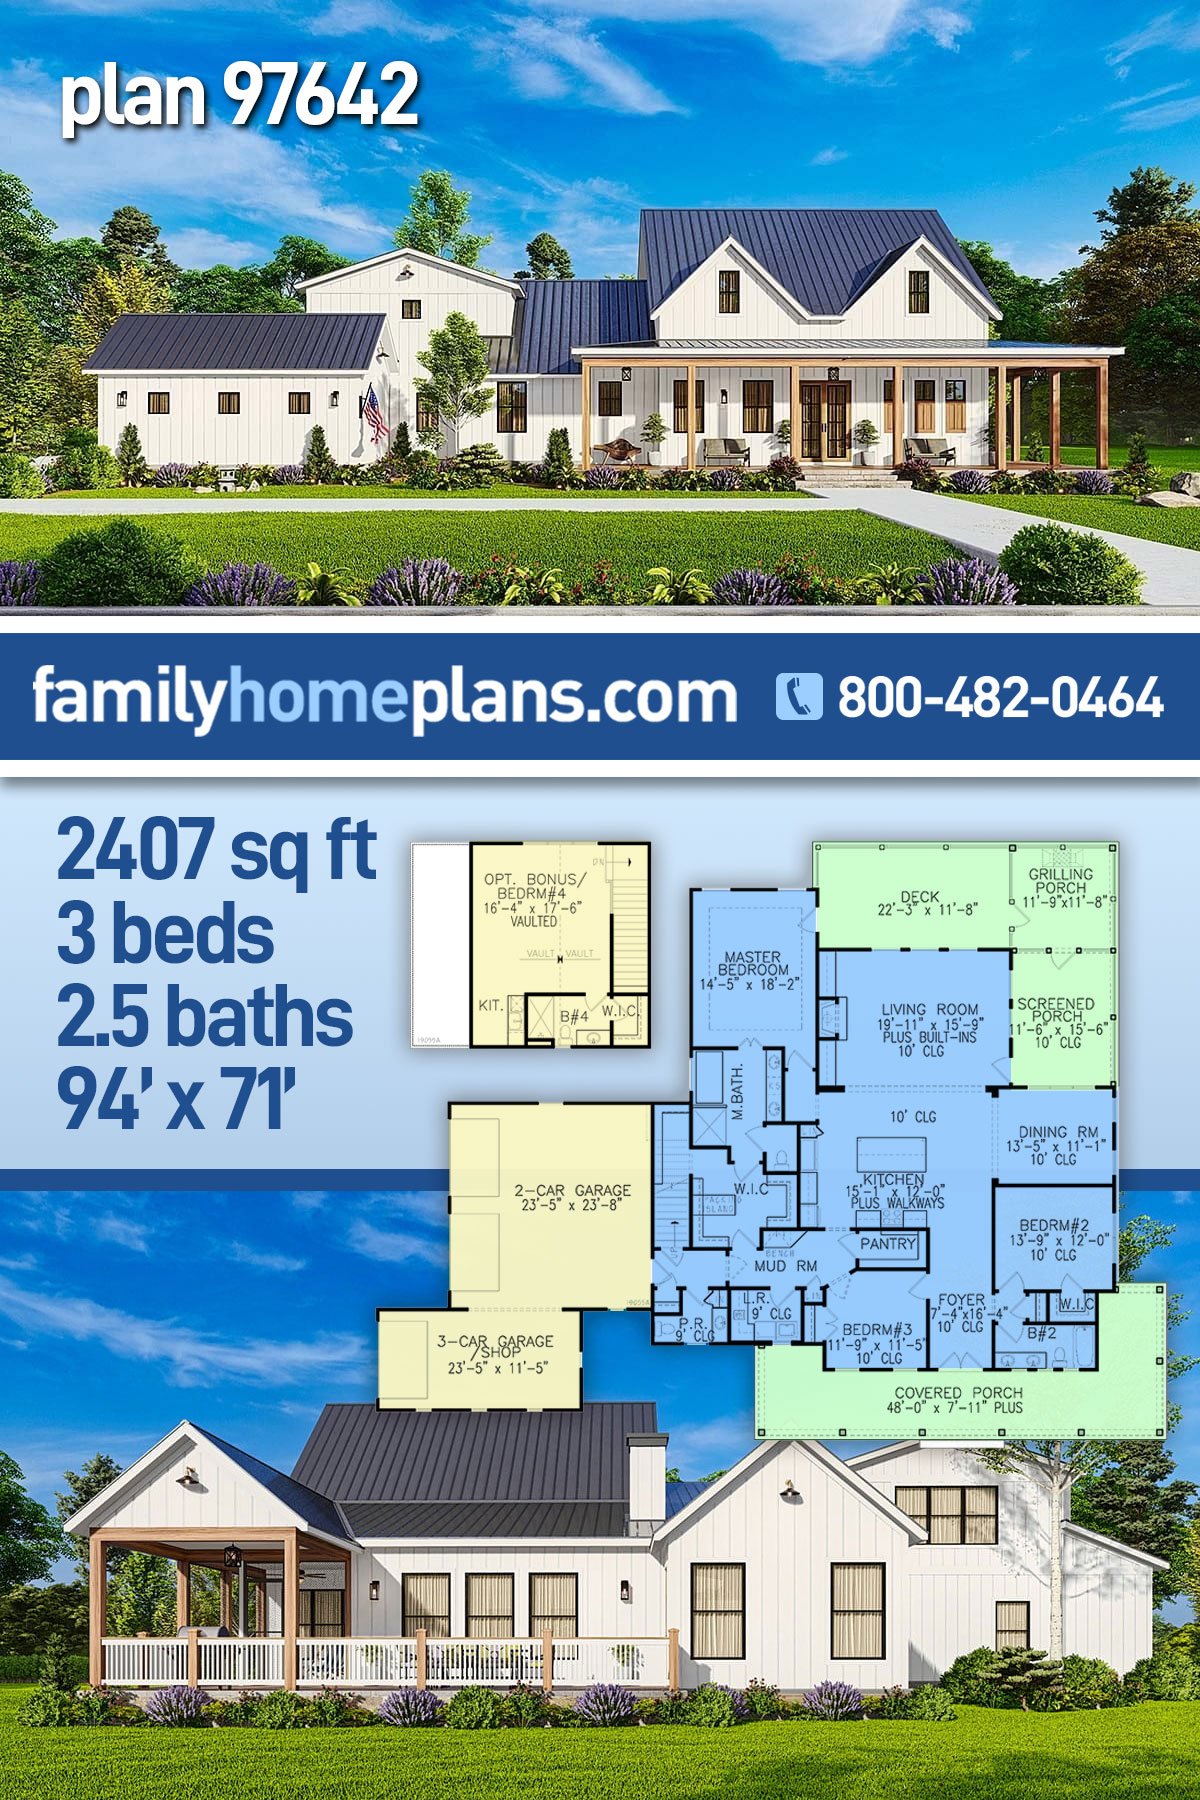 House Plan 97642